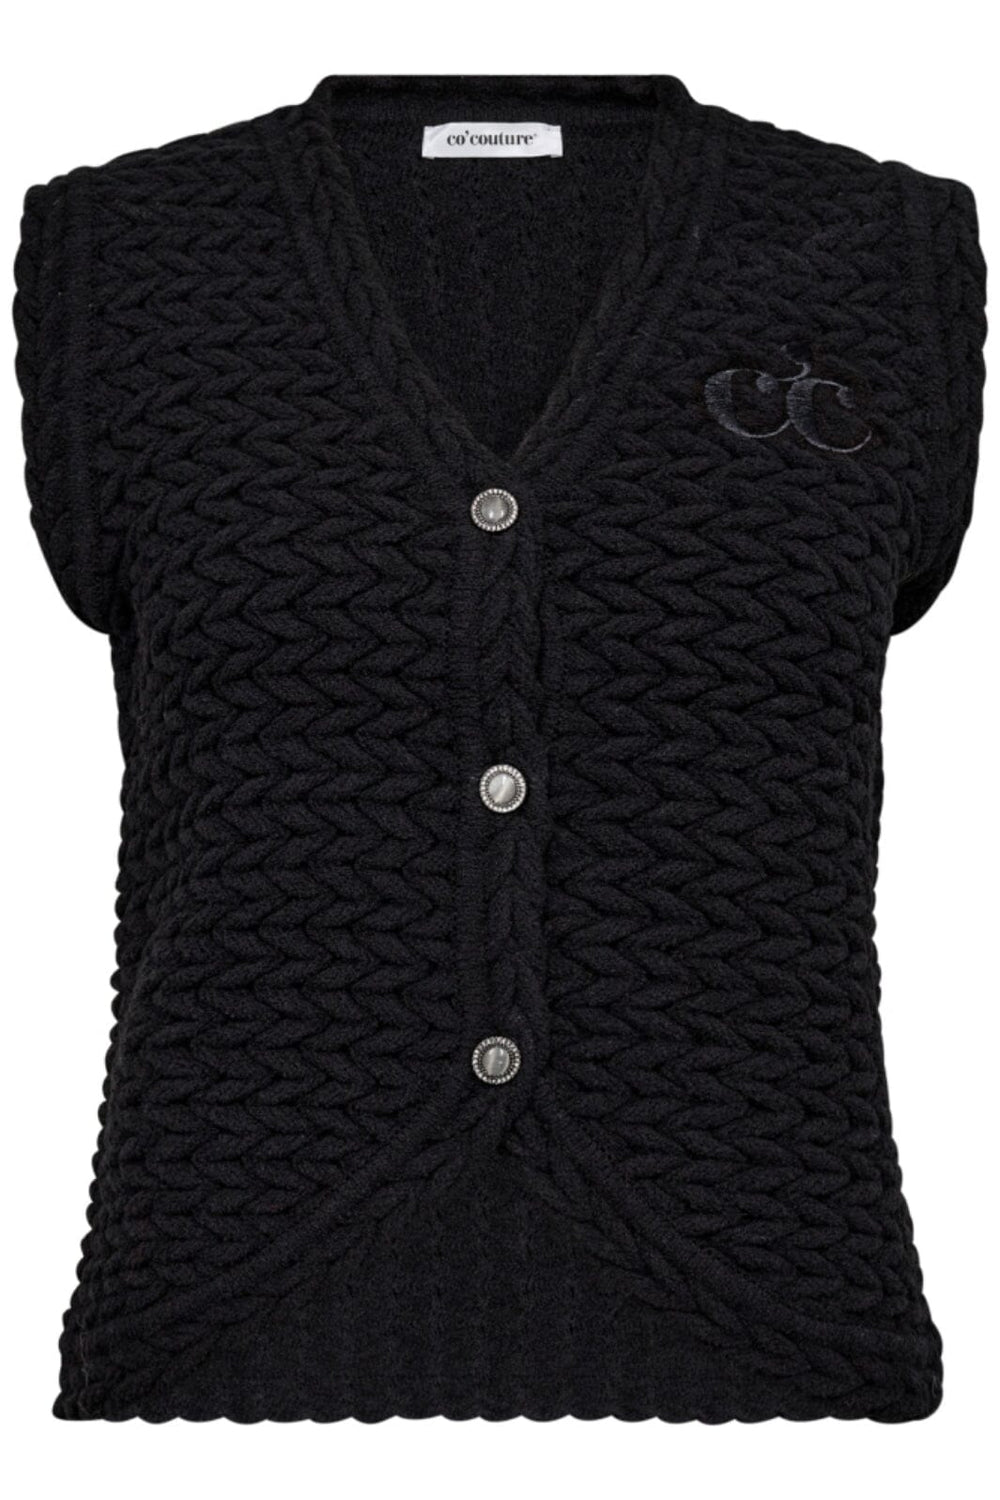 Co´couture - Millycc Knit Vest 32131 - 96 Black Strikbluser 